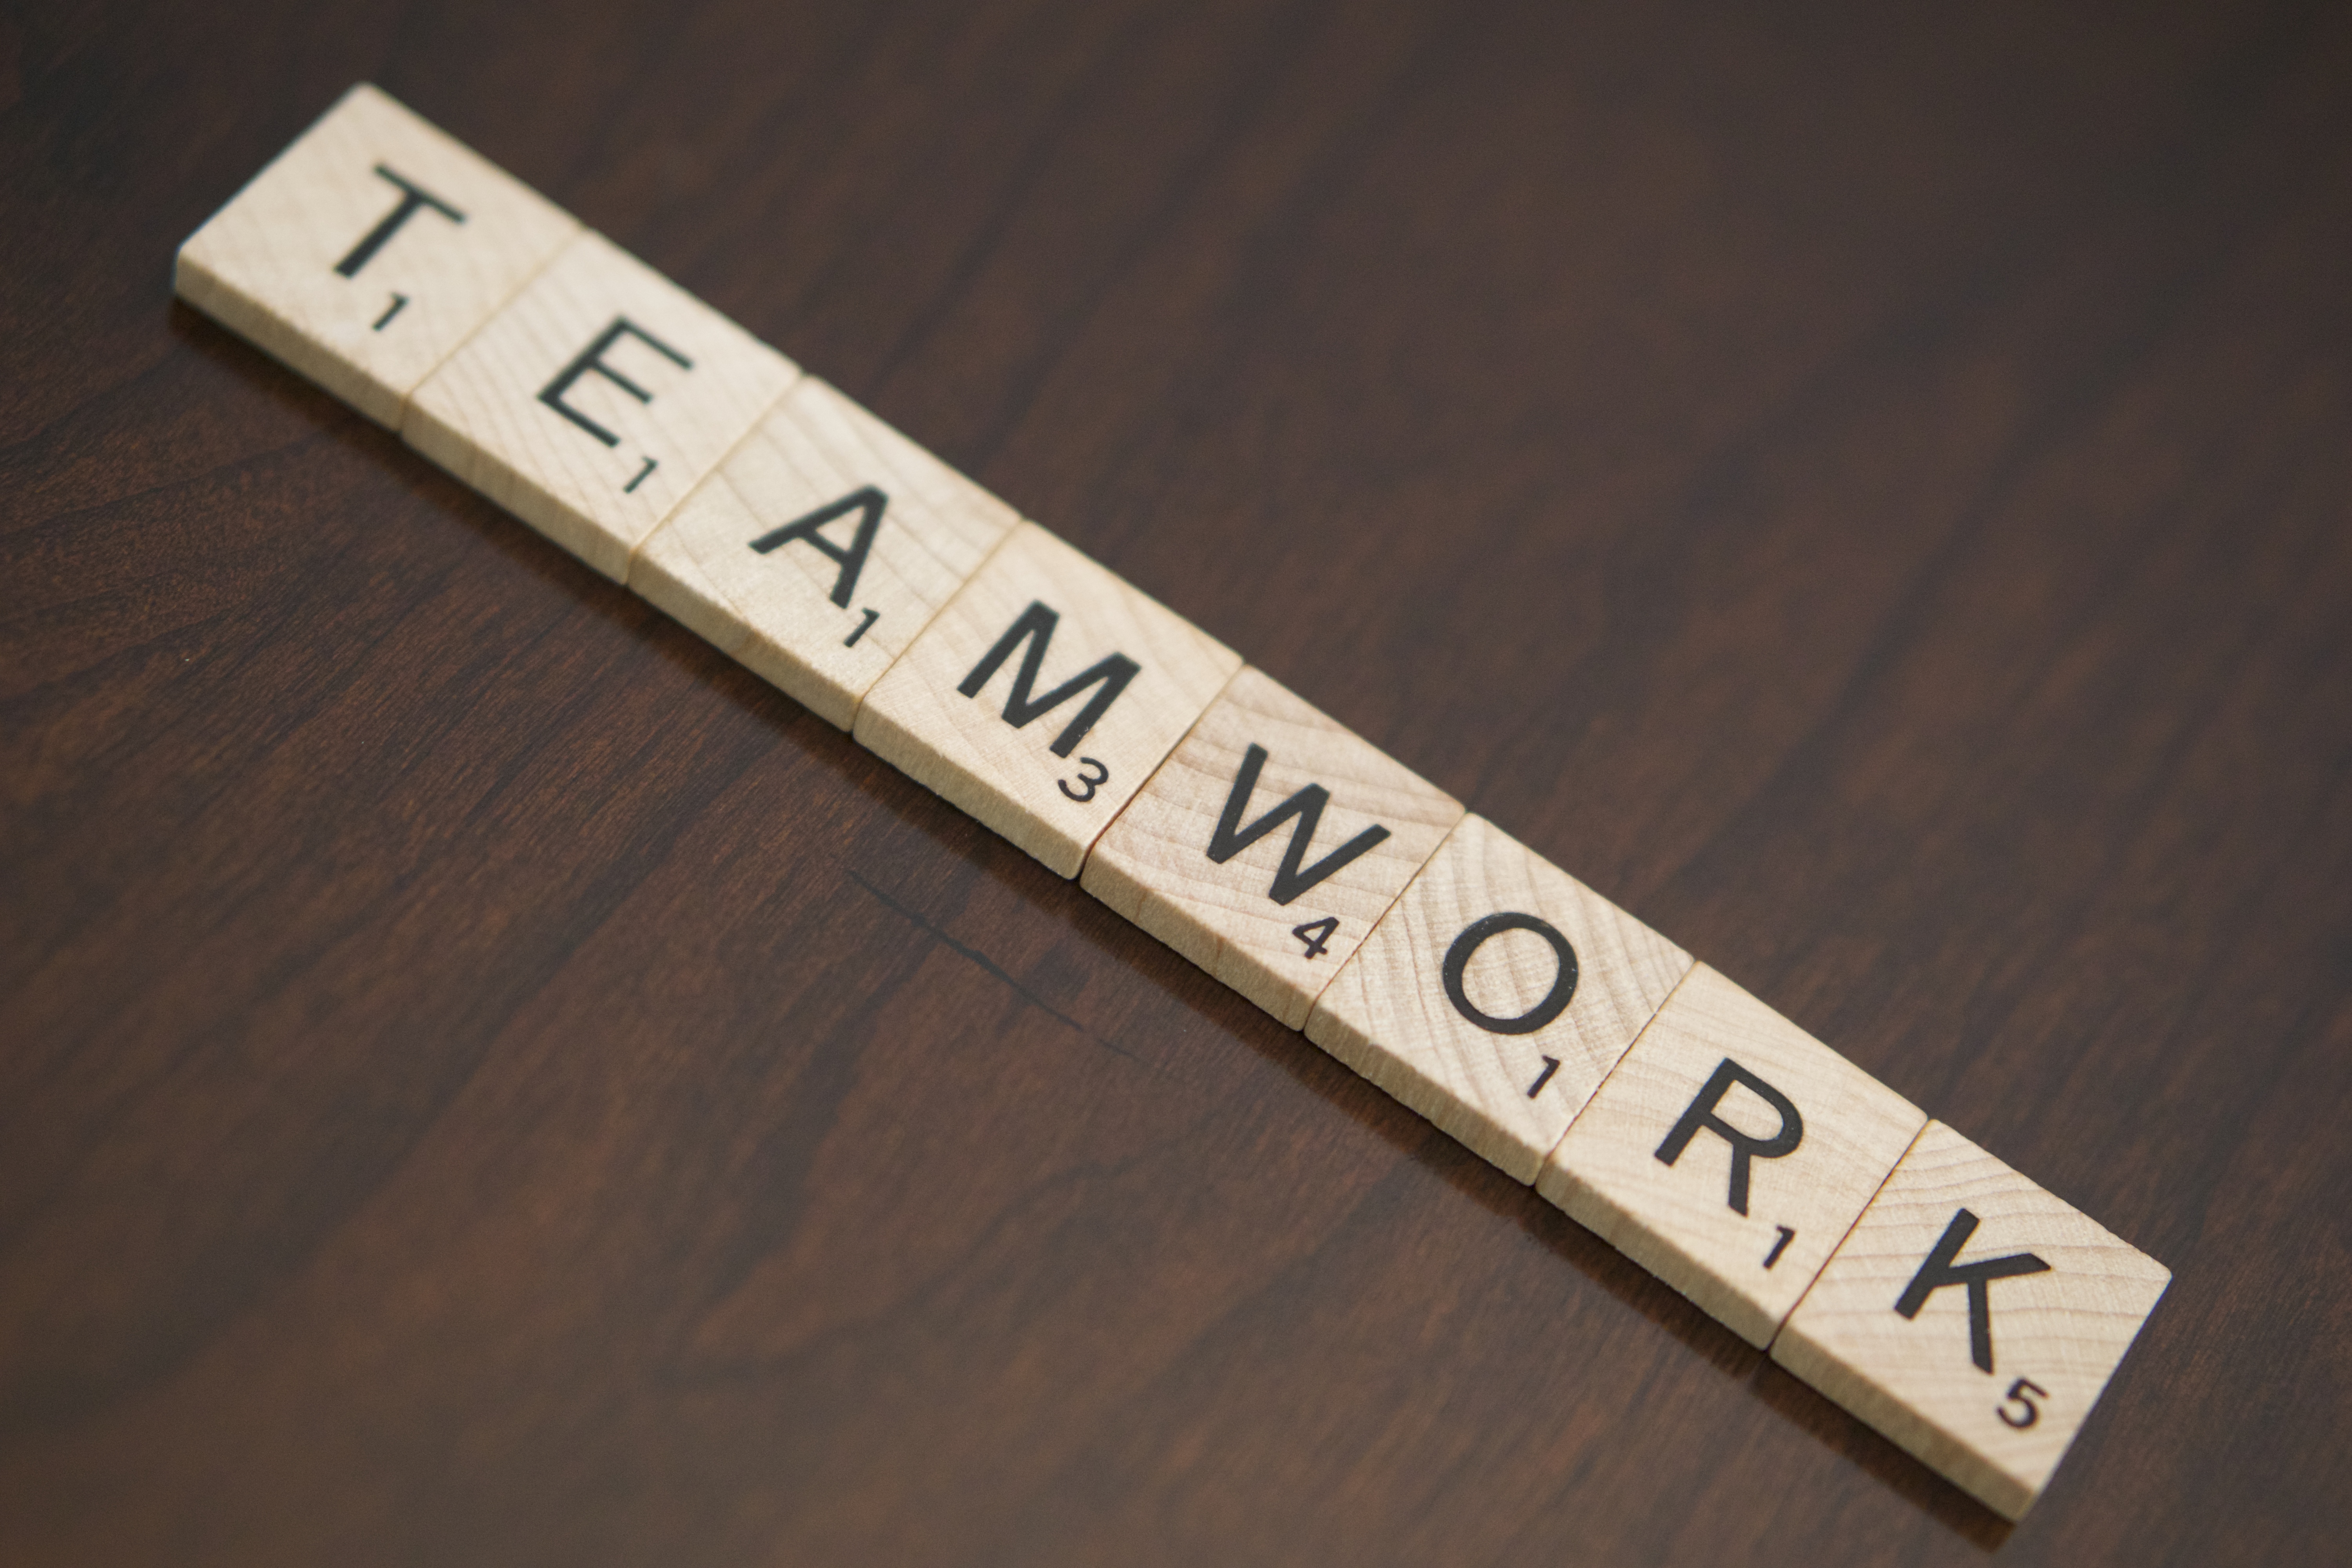 Teamwork word